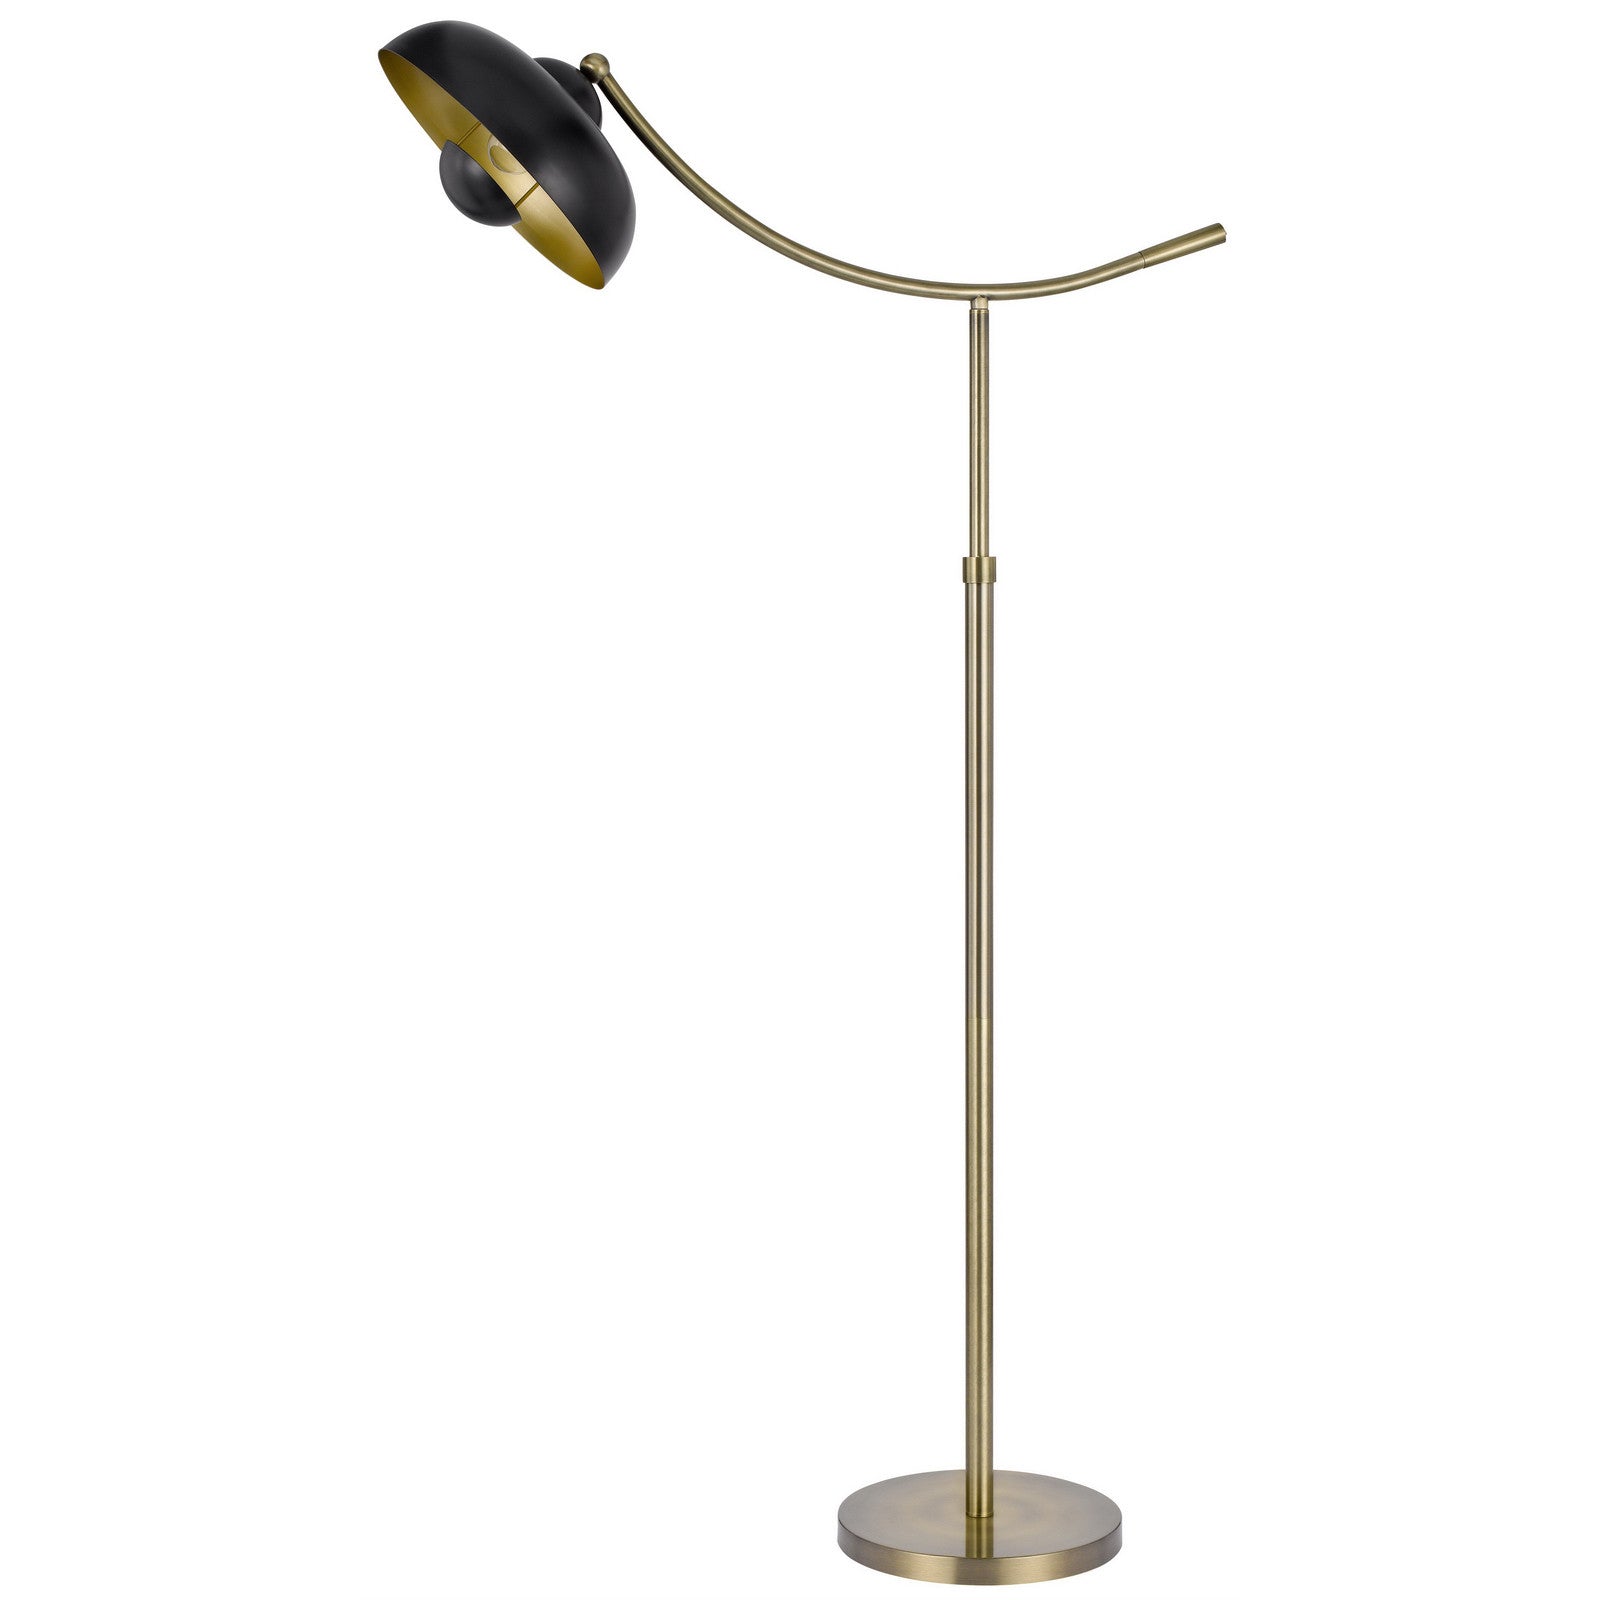 66" Bronze Adjustable Arc Floor Lamp With Bronze Dome Shade